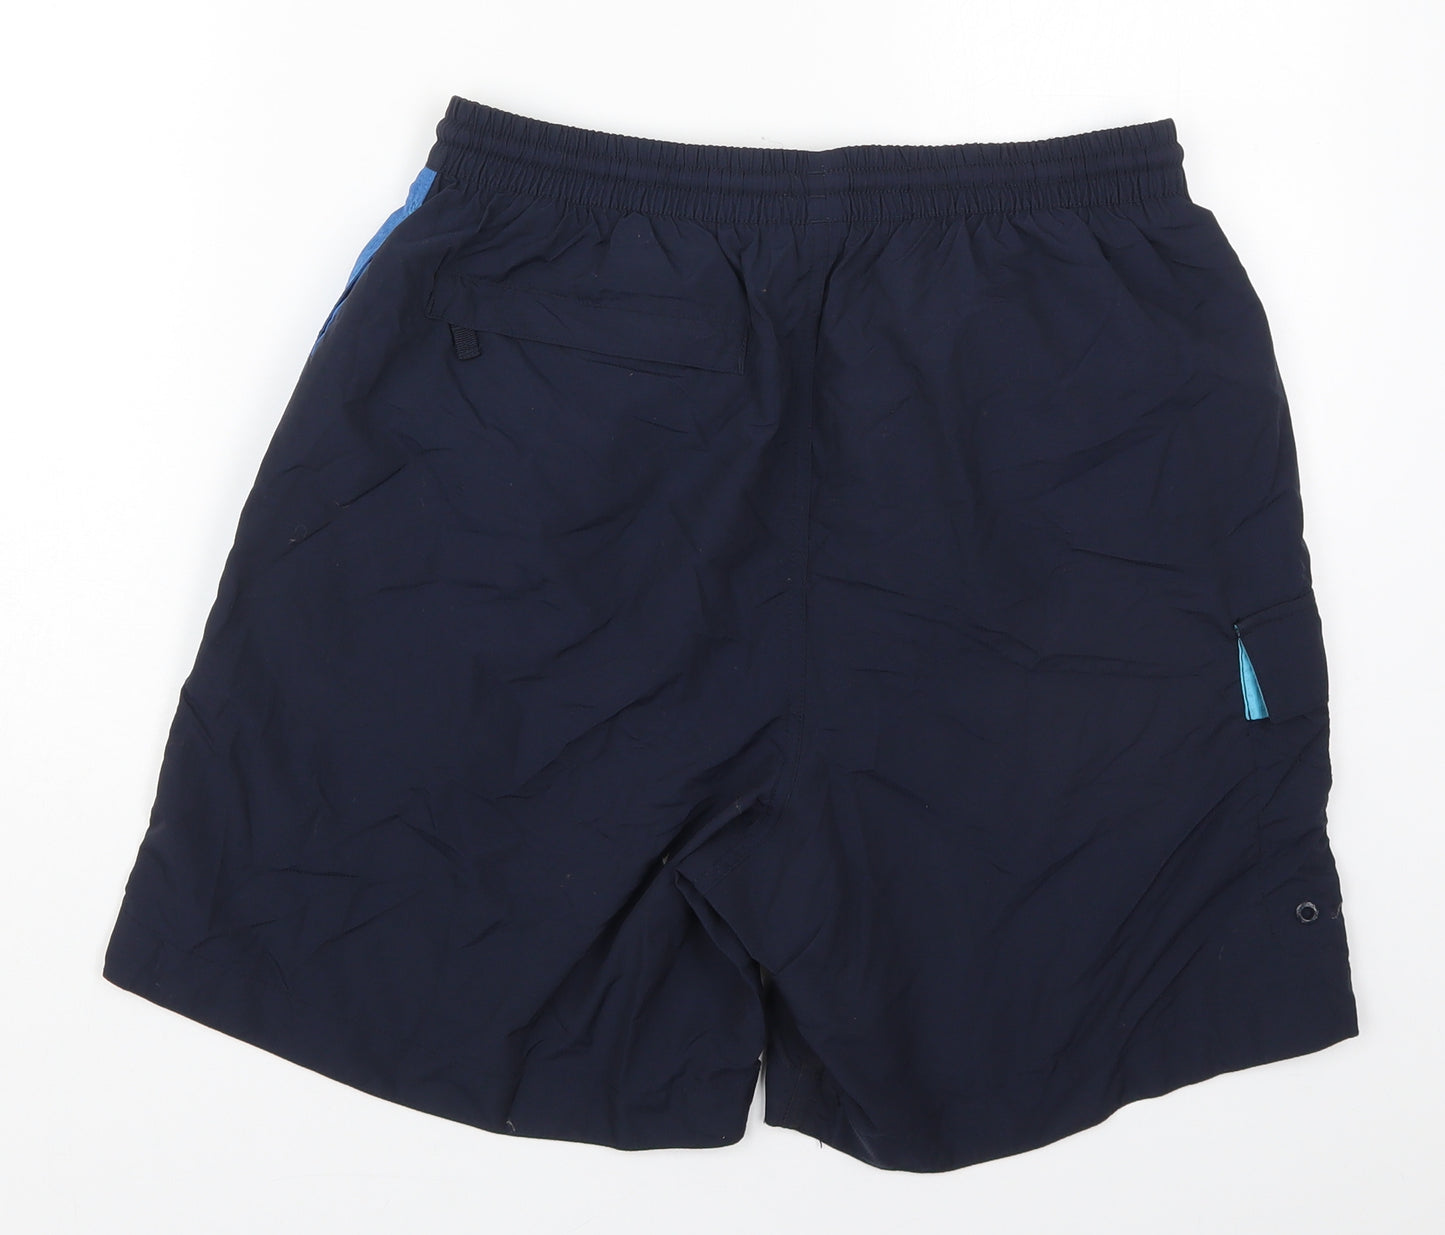 Nautica Mens Blue Striped Nylon Athletic Shorts Size M L6 in Regular Drawstring